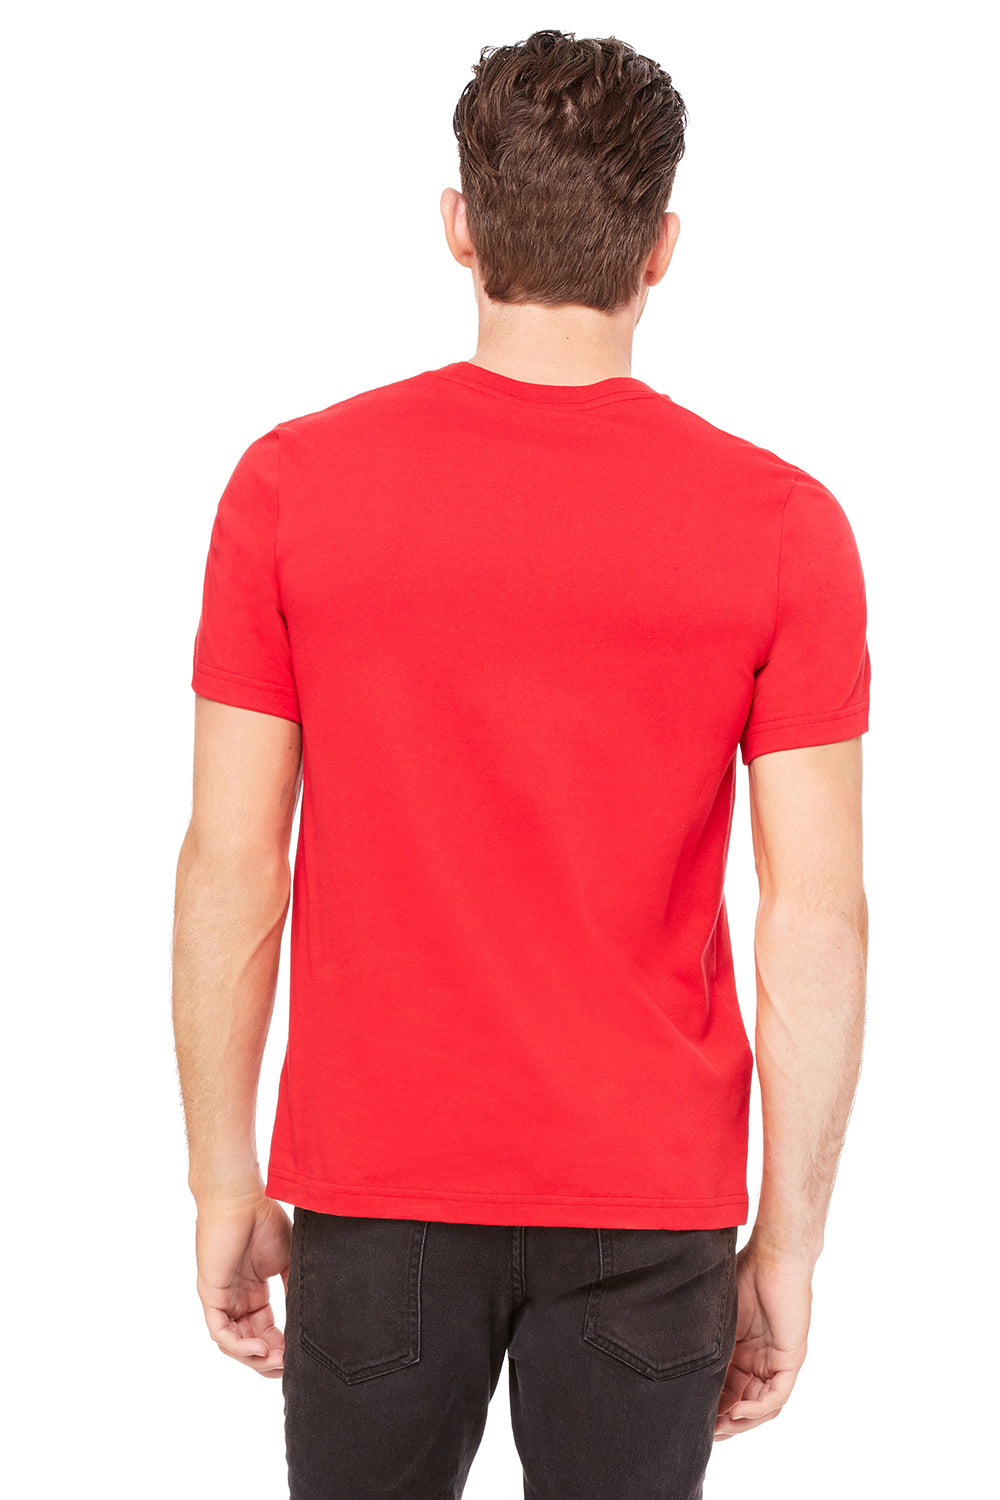 Bella + Canvas 3091 Mens Short Sleeve Crewneck T-Shirt Red Back